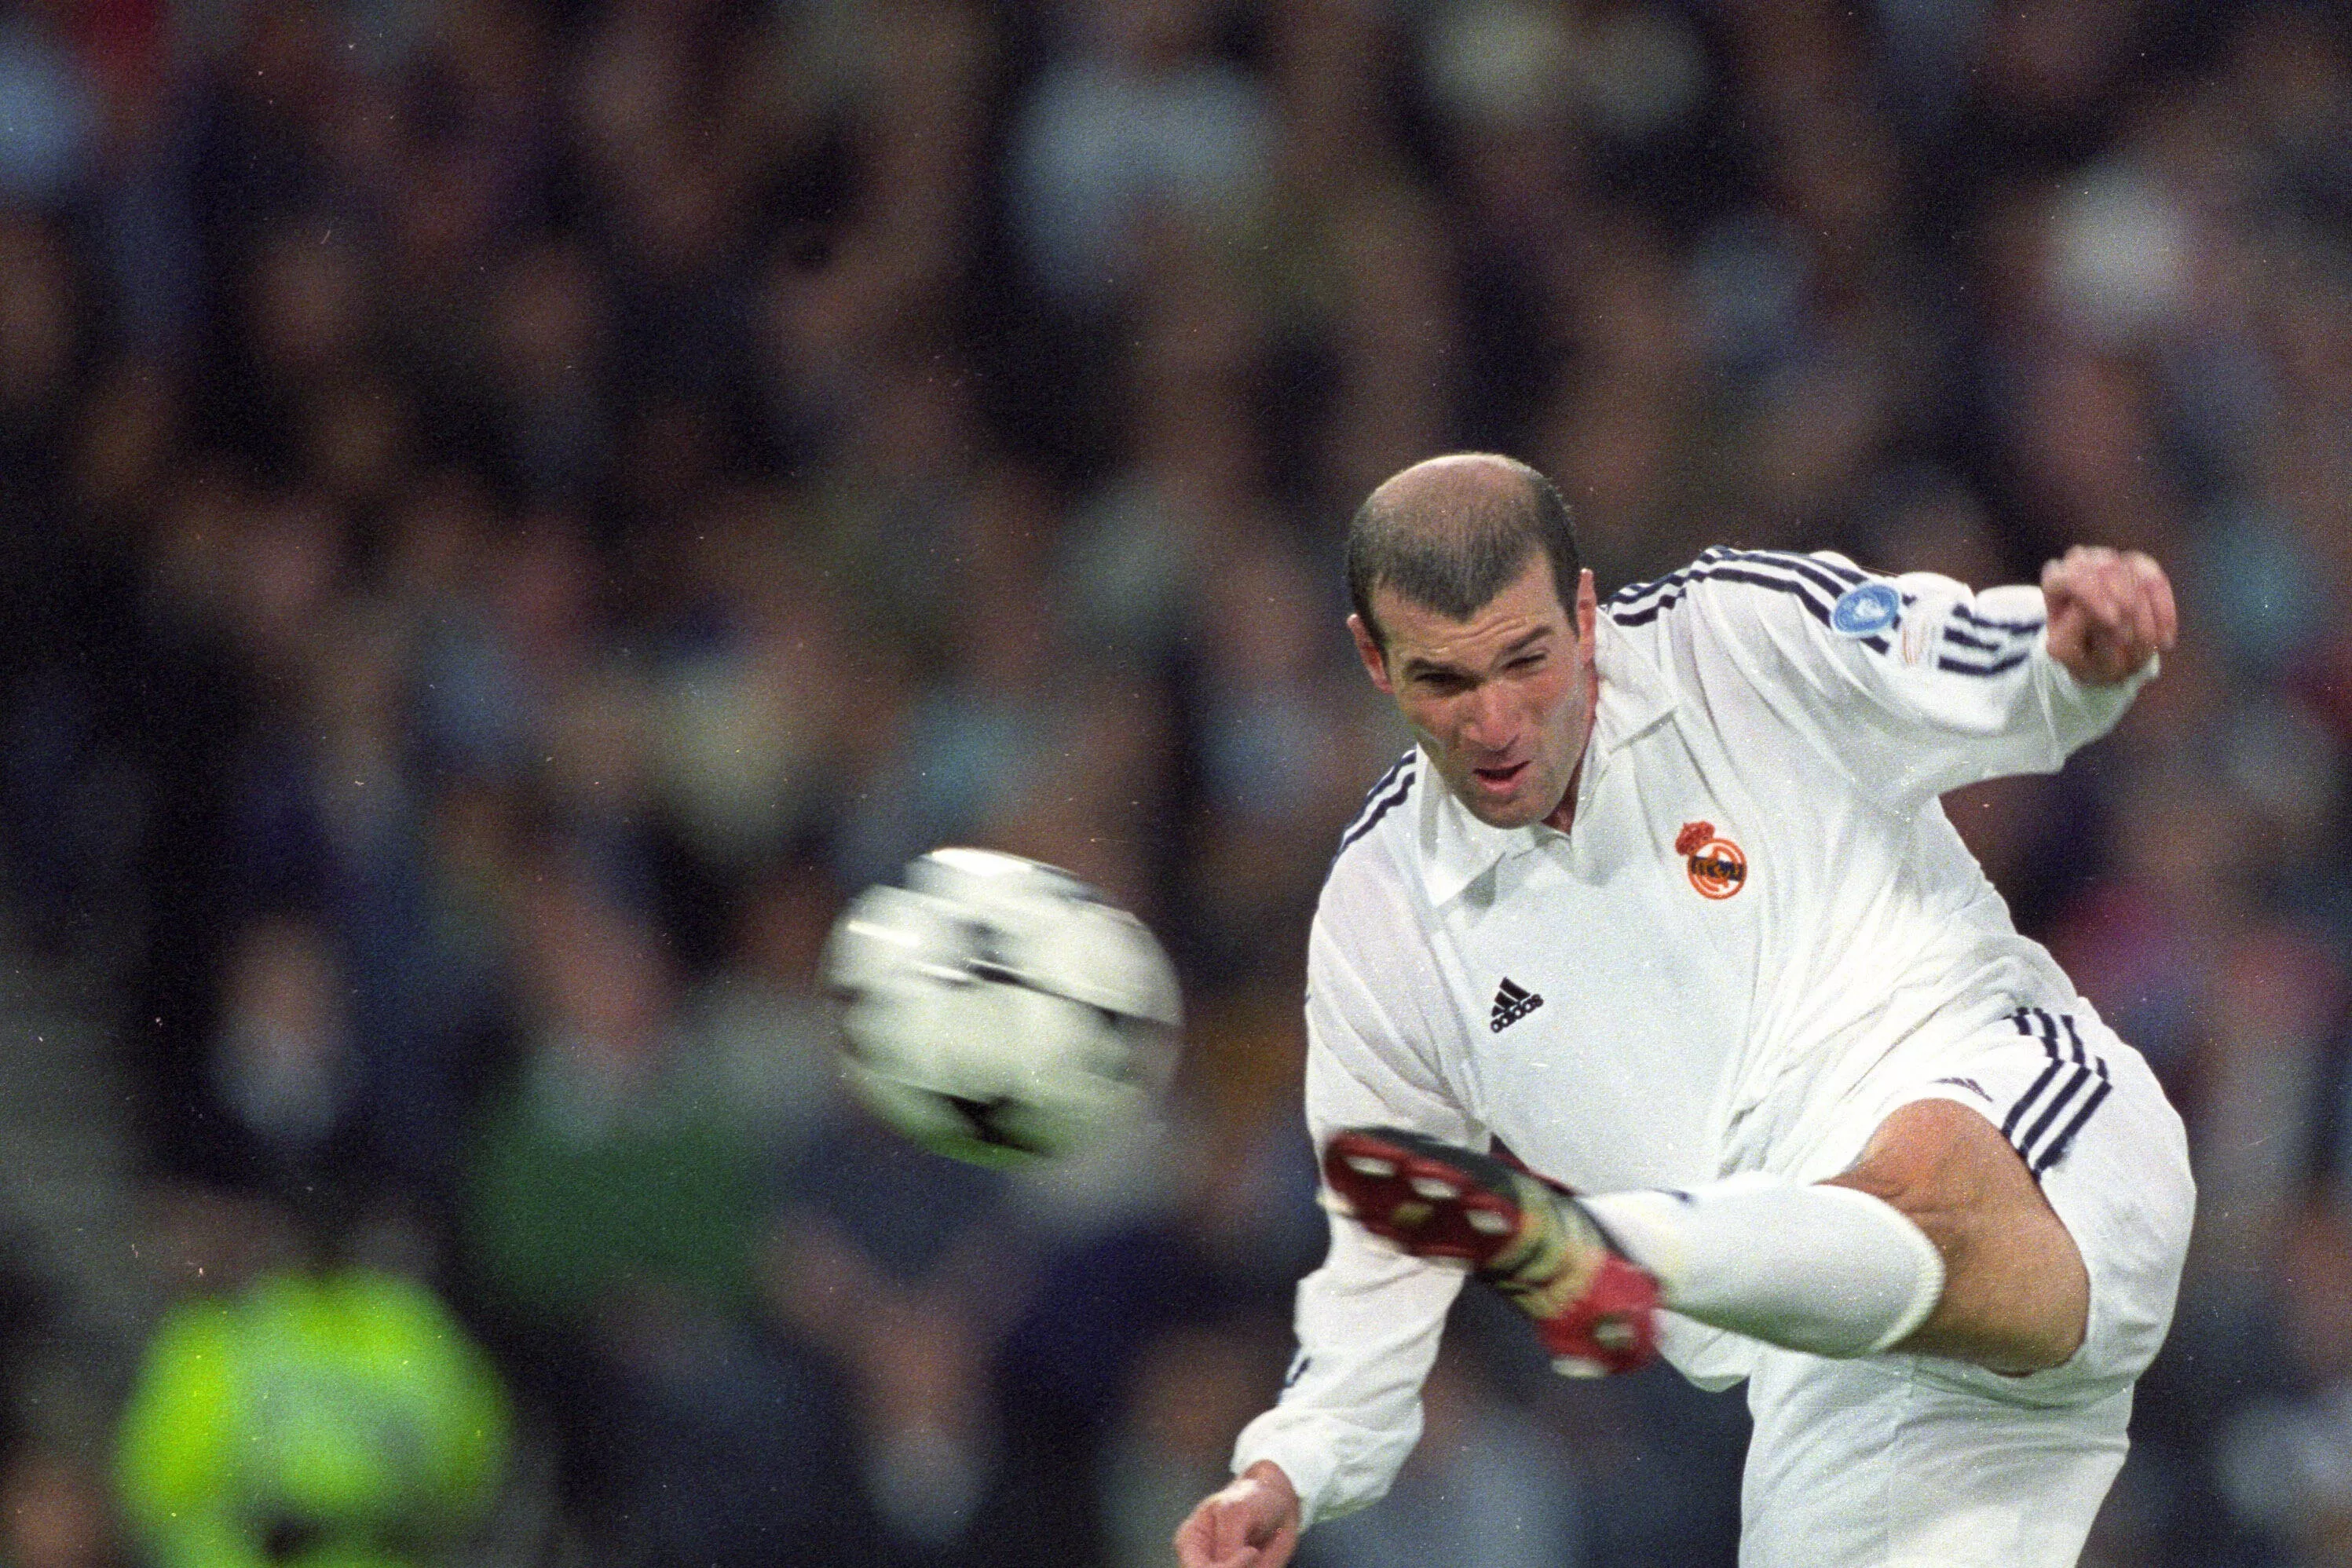 Zinedine-Zidane-voleys-the-ball-in-the-2002-Champions-League-final-v-Leverkusen